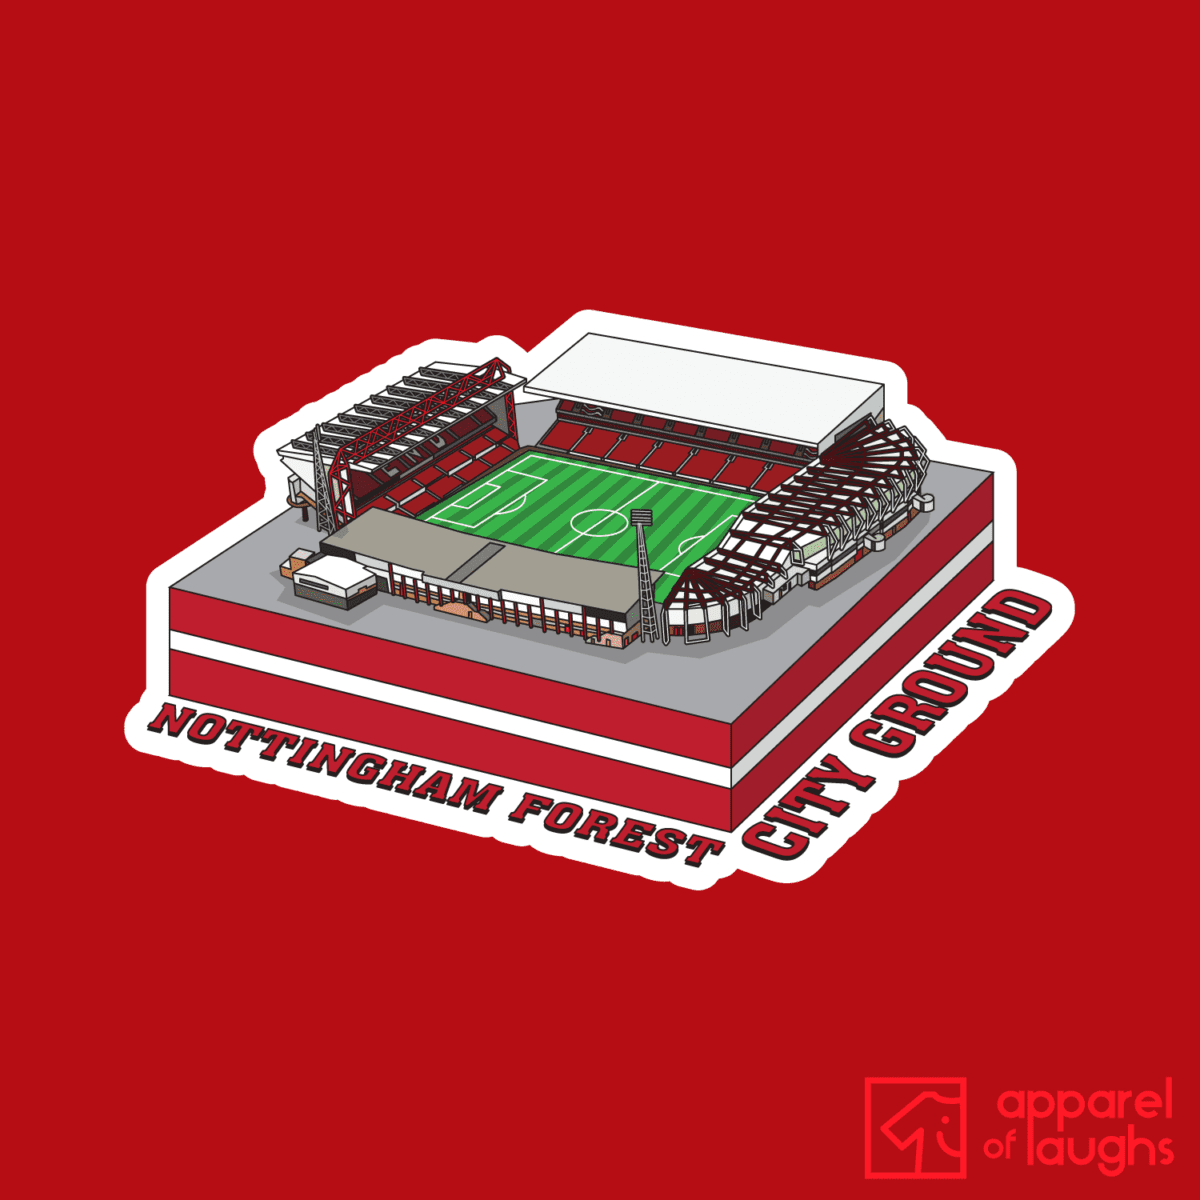 Nottingham Forest City Ground Football Stadium Illustration T Shirt Design Red